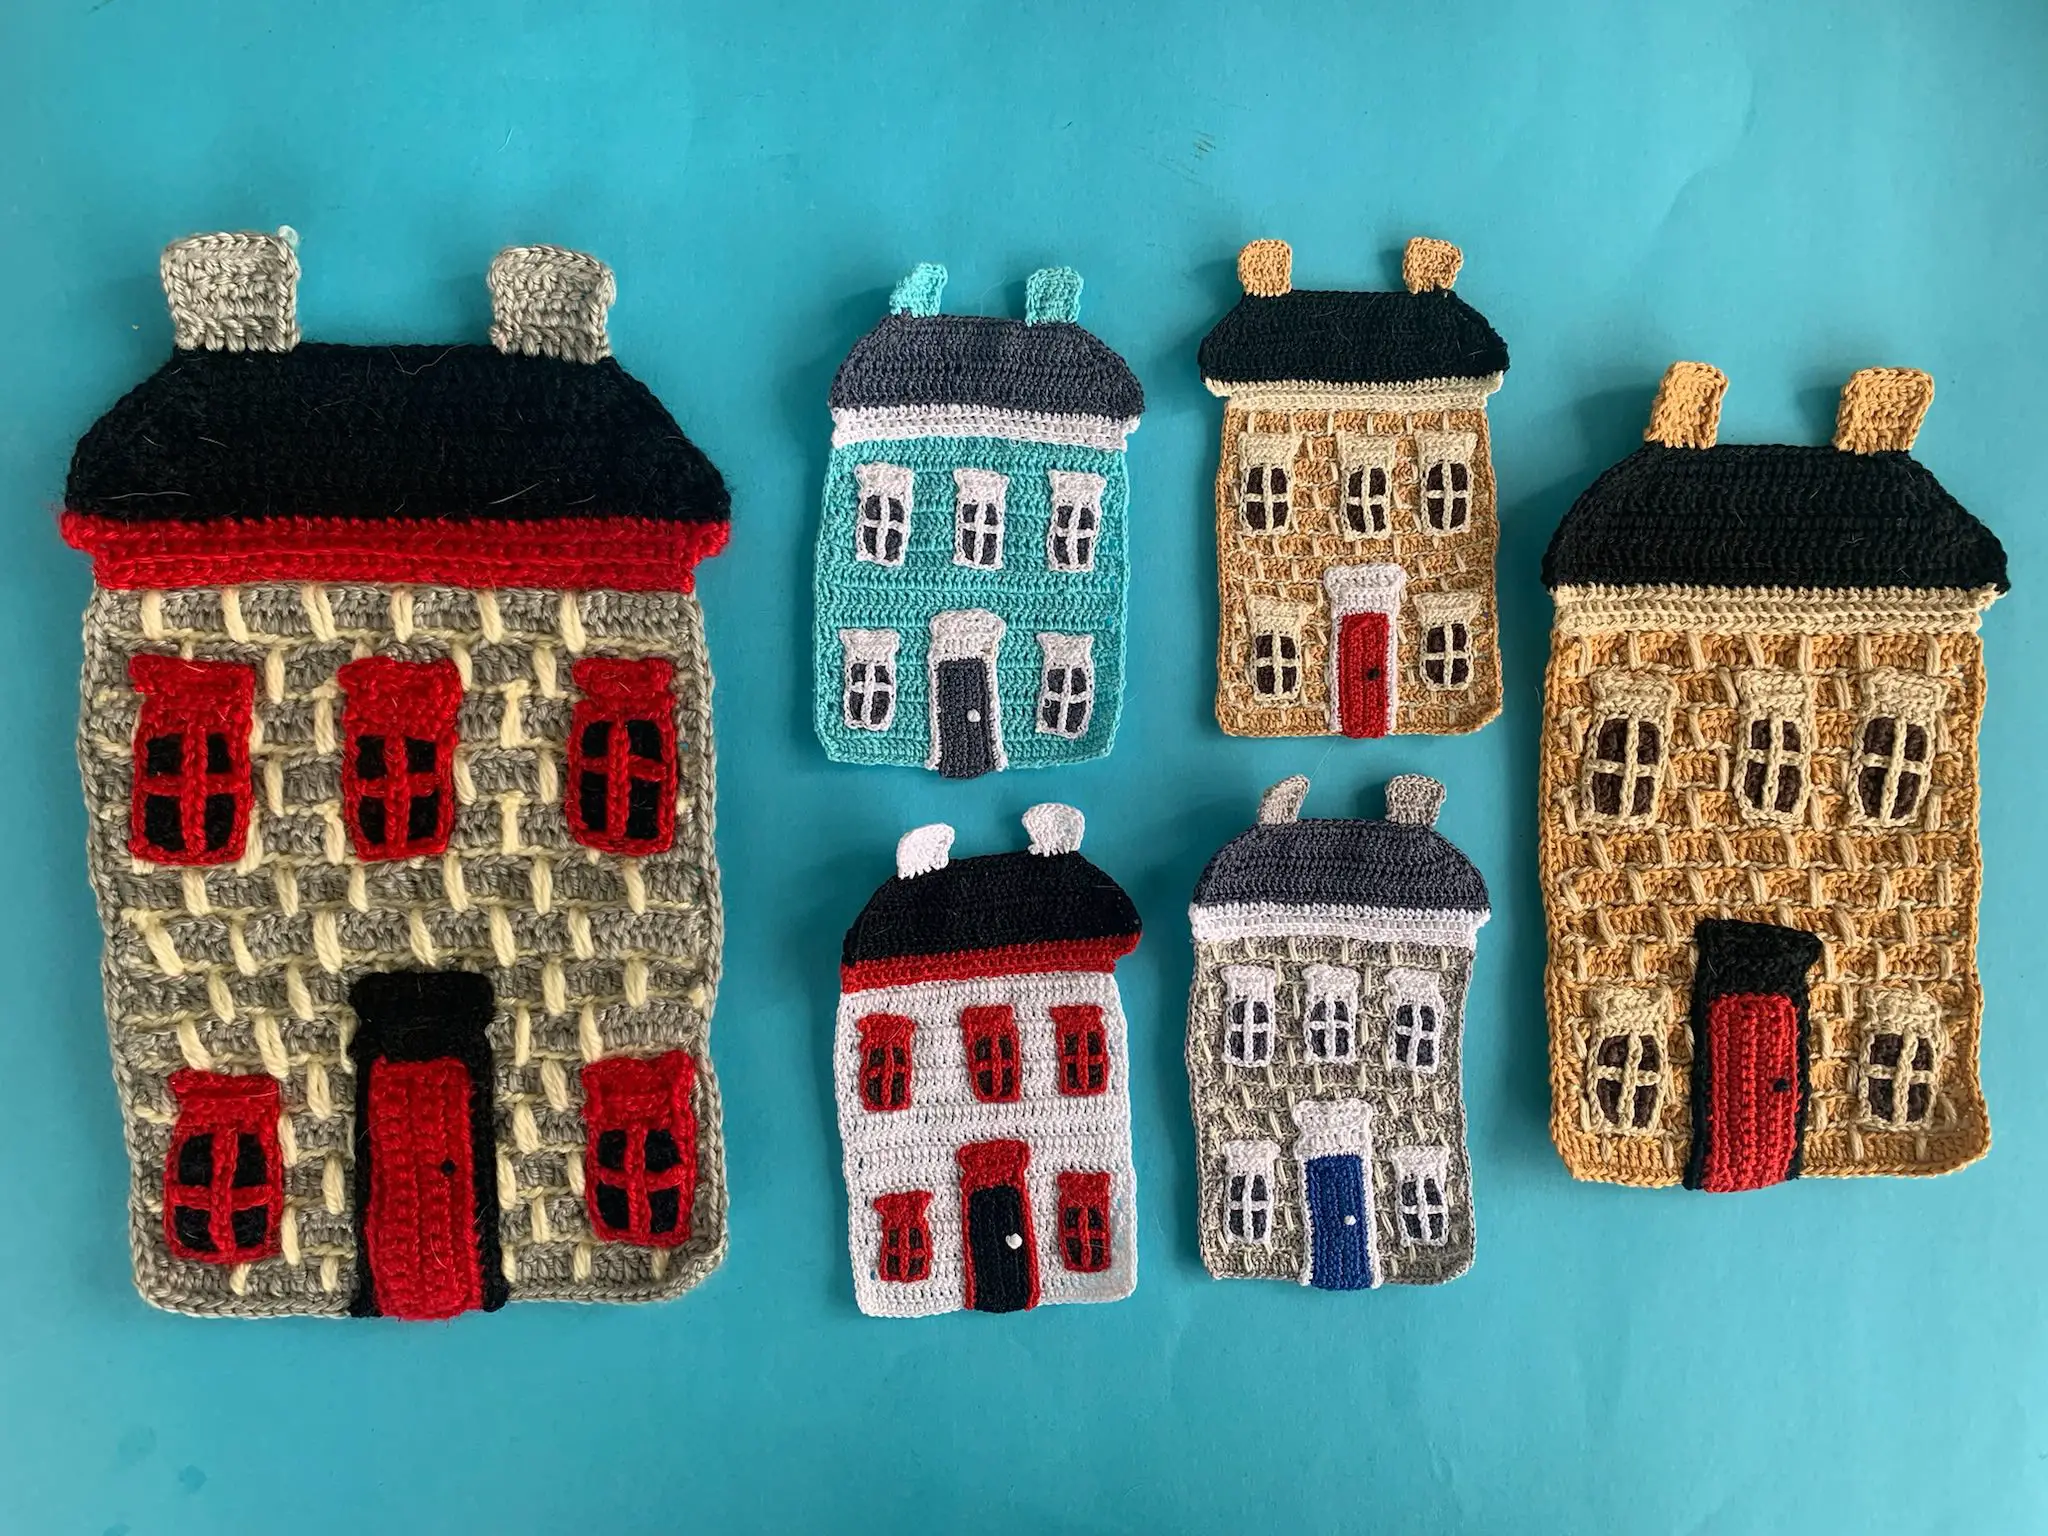 Finished crochet house 2 ply group landscape 4